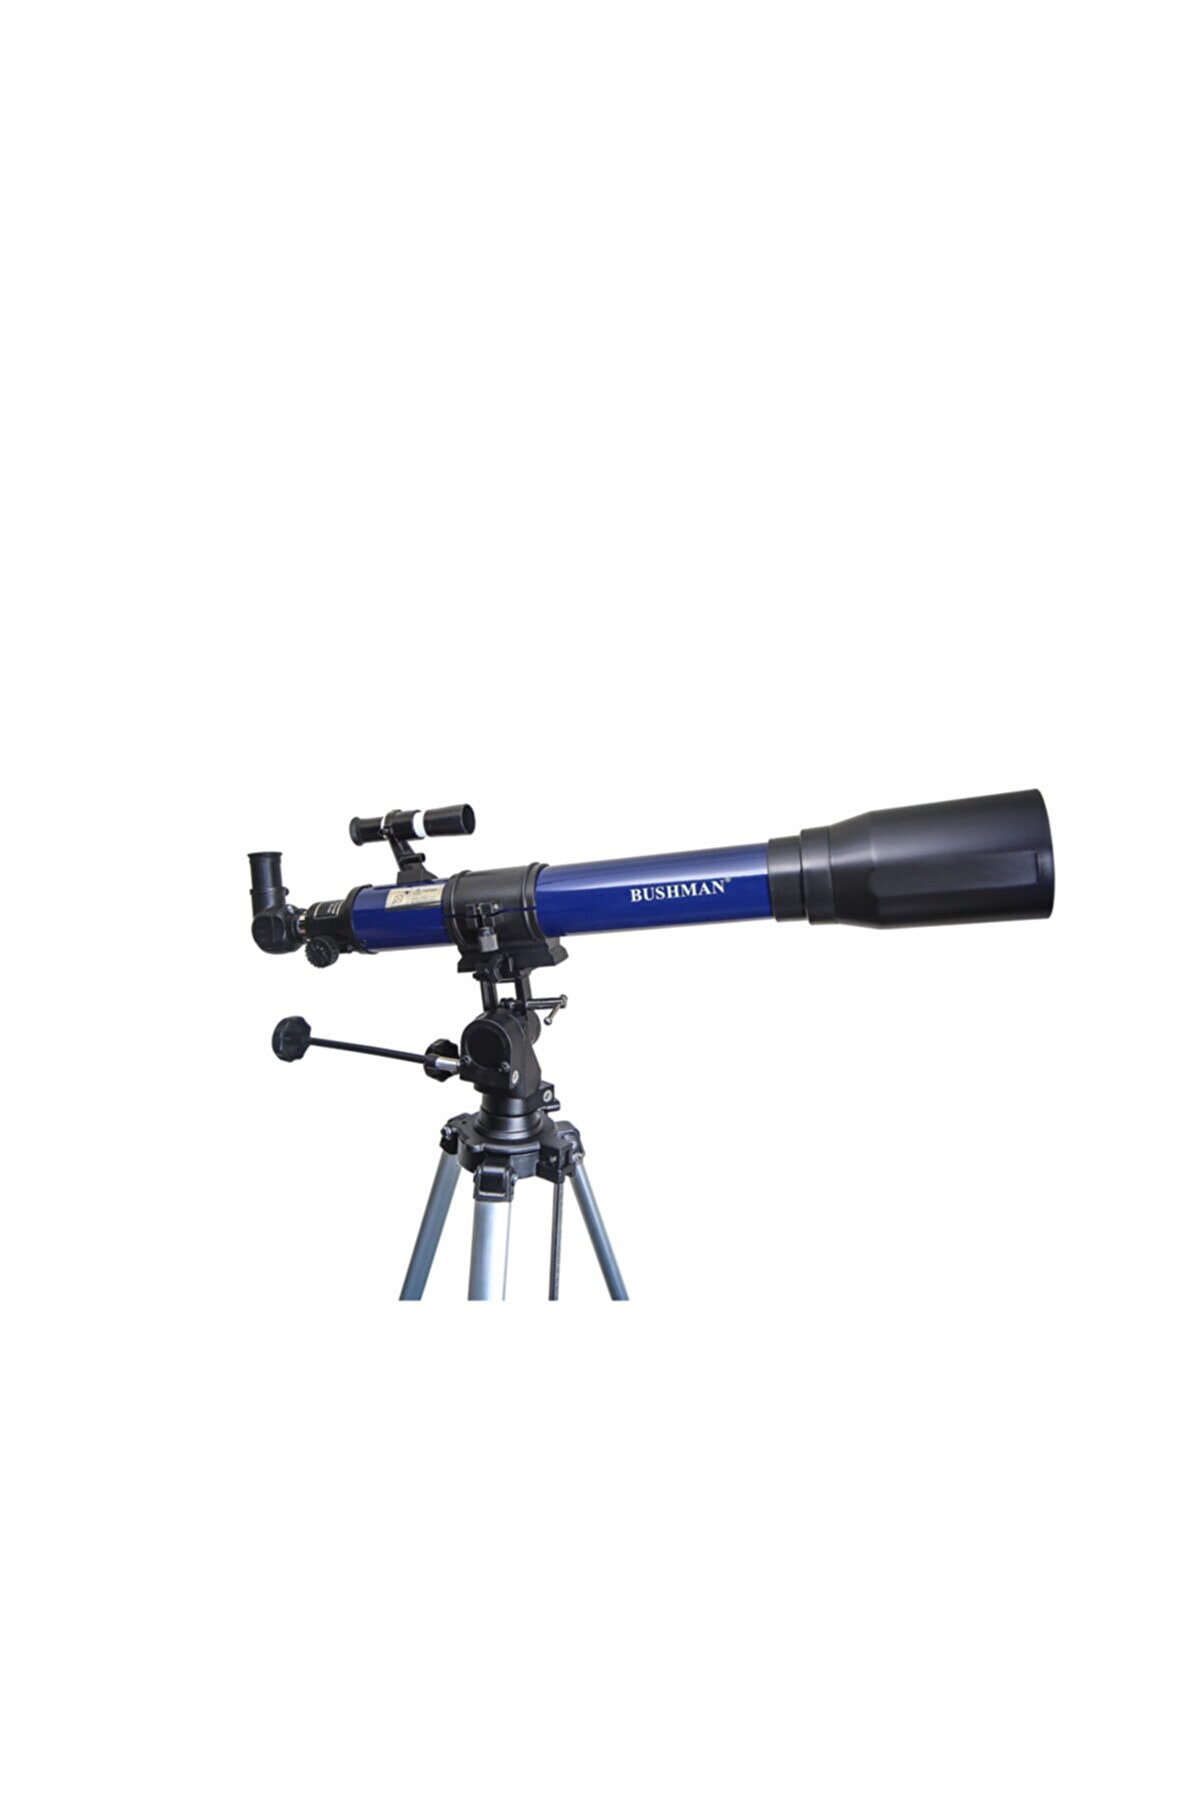 Bushman 70-700 Teleskop